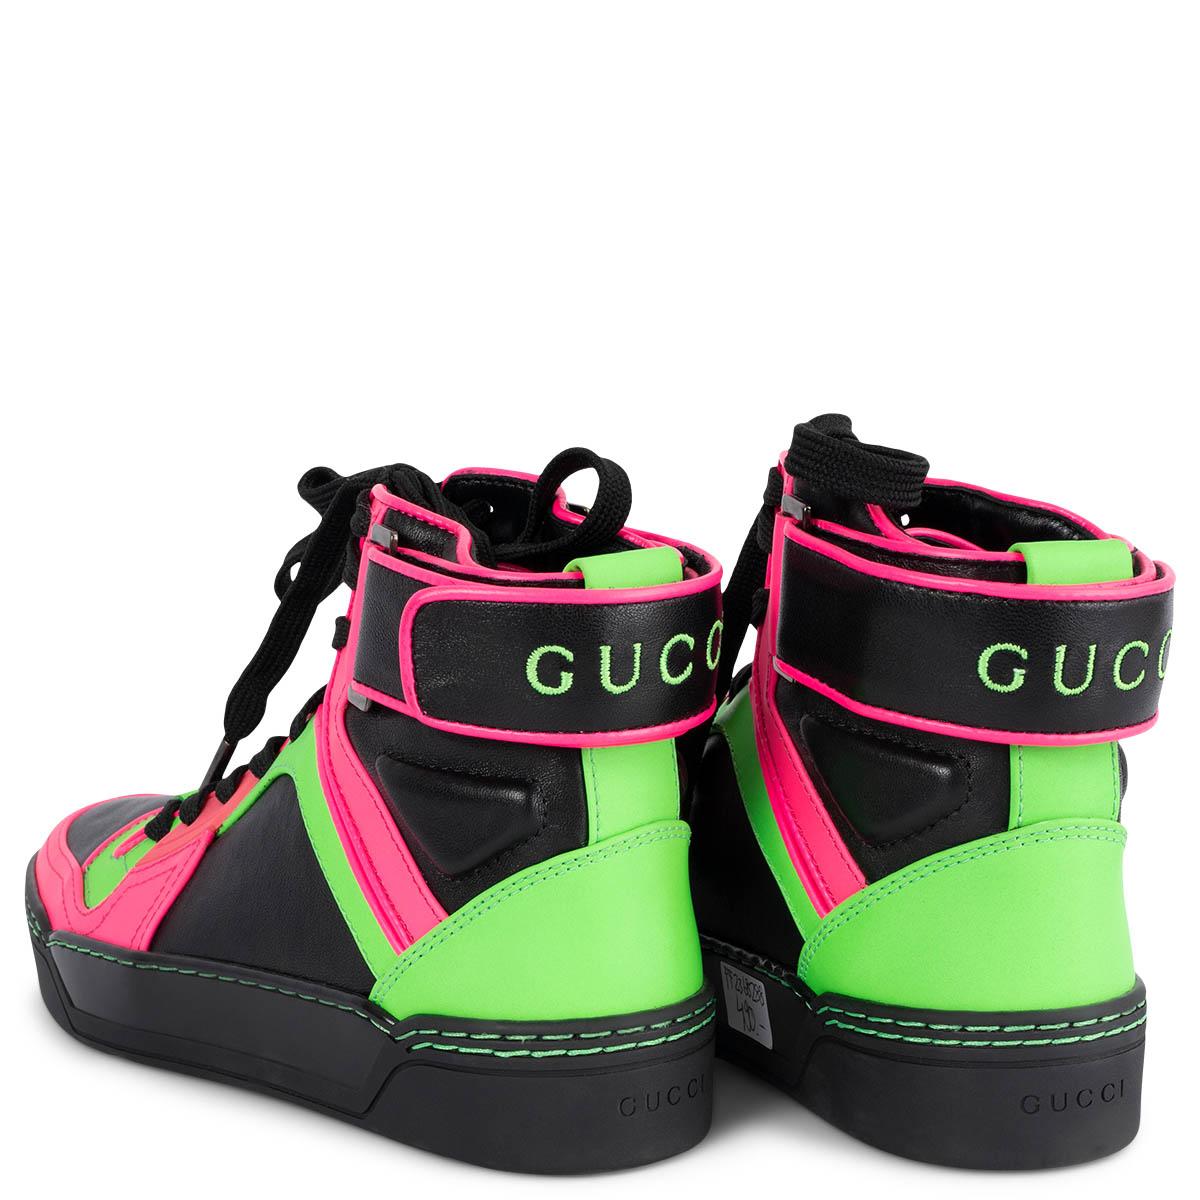 GUCCI neon & black NEW BASKETBALL High Top Sneakers Shoes 35.5 en vente 2